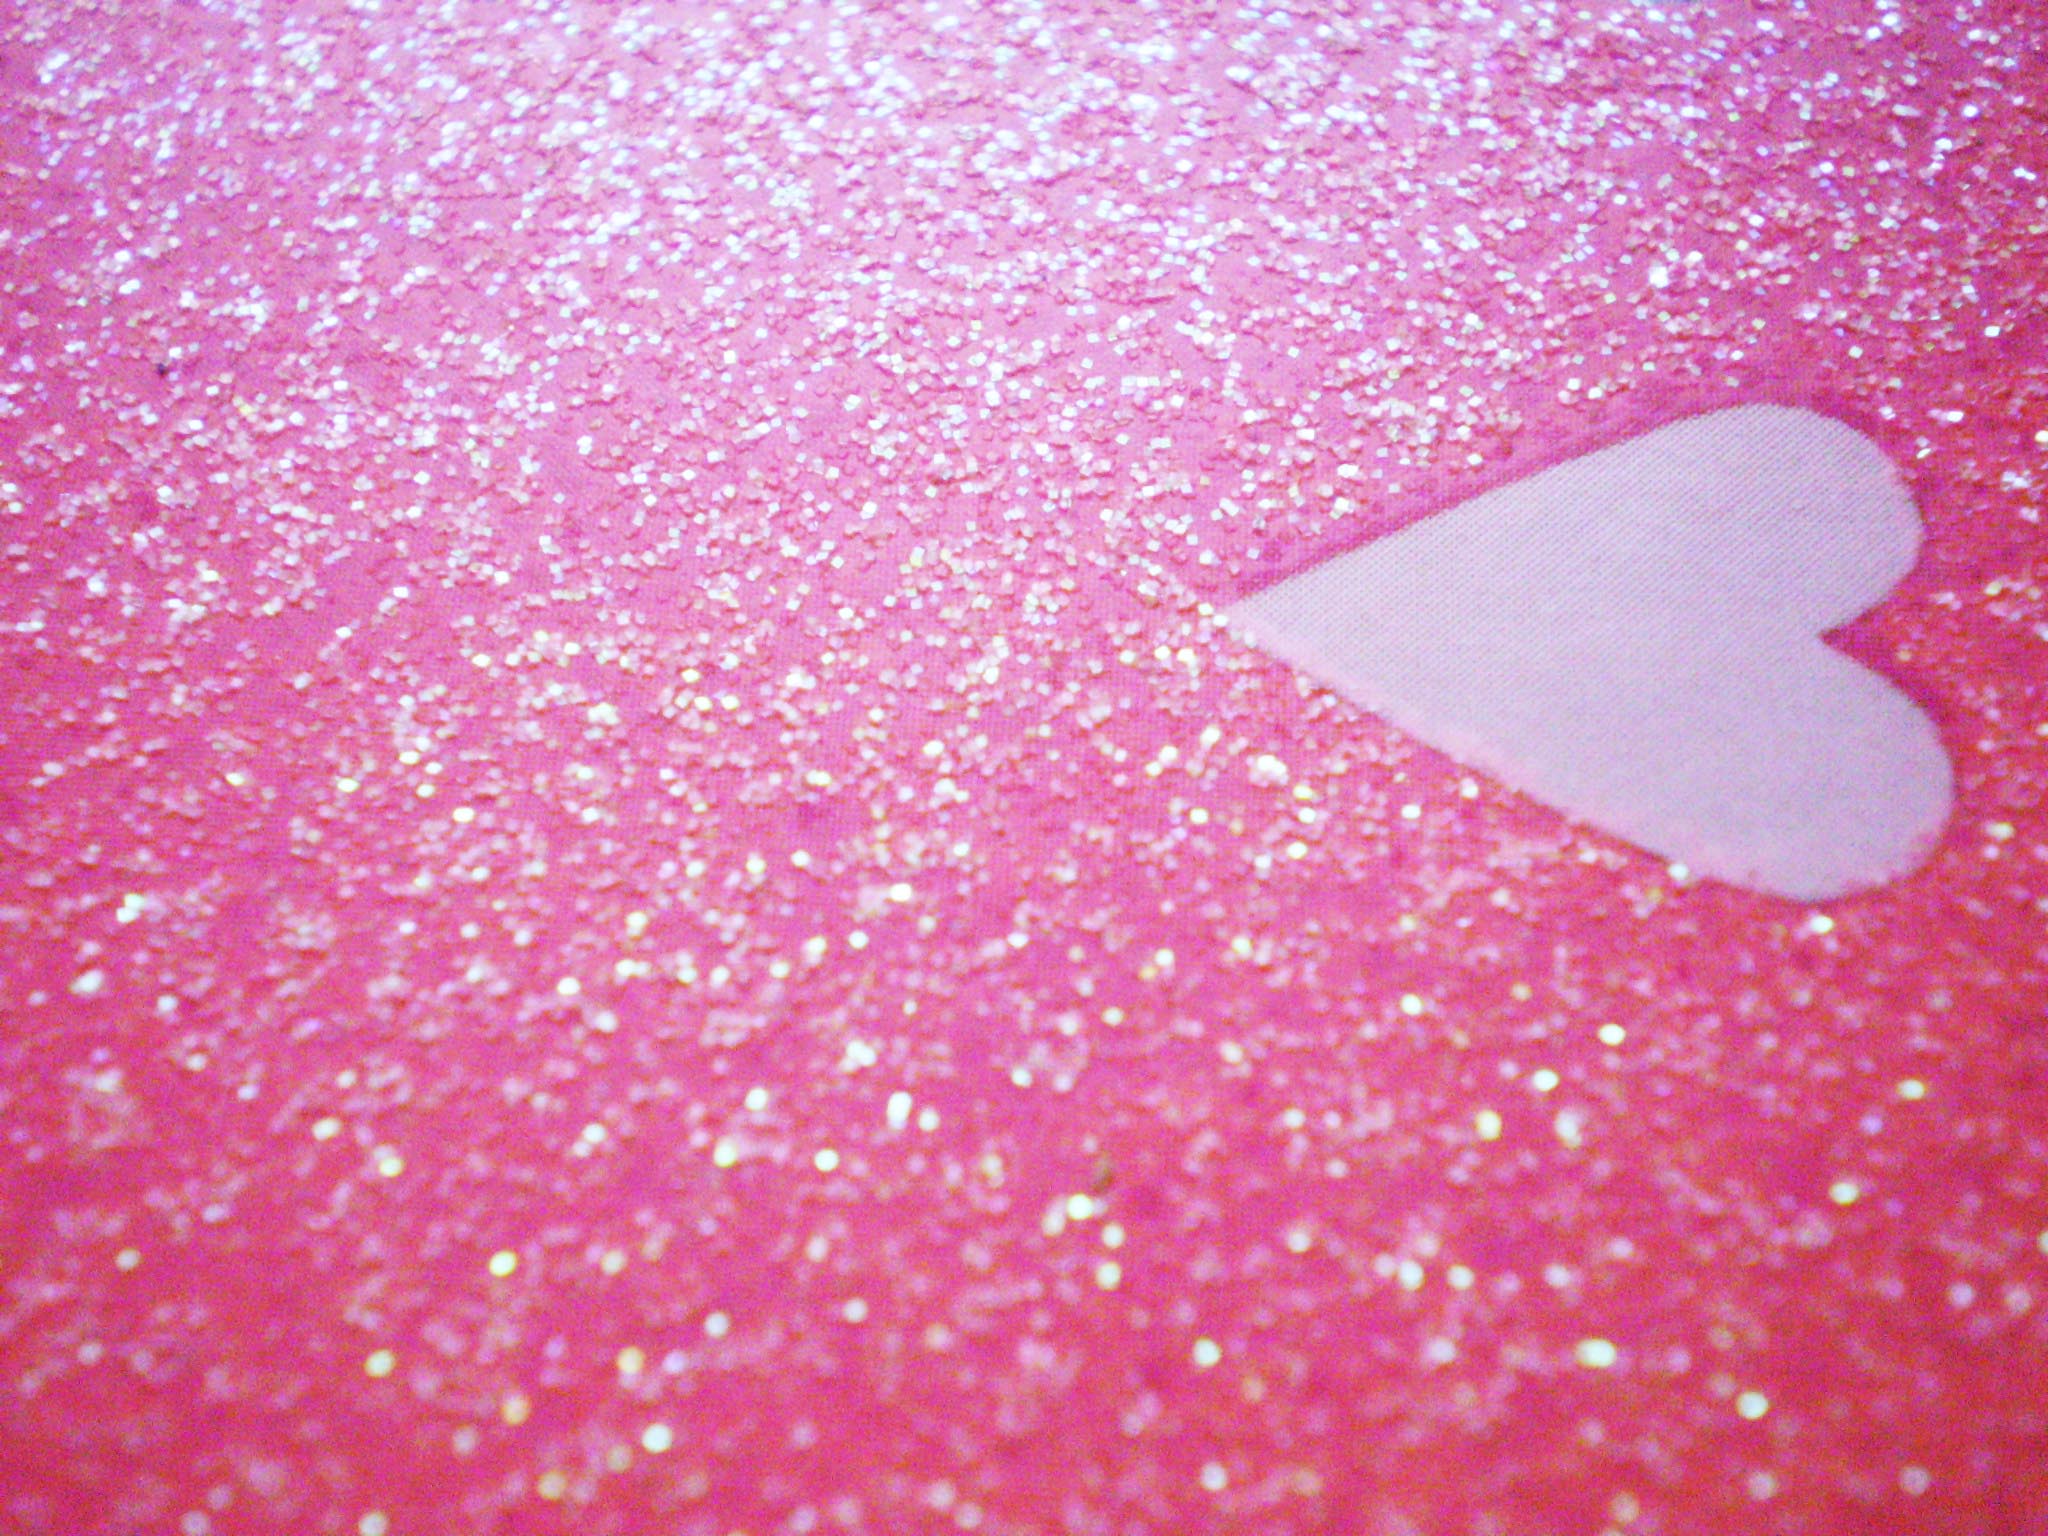 ... pink-glitter-hd-wallpapers OLYMPUS DIGITAL CAMERA ...